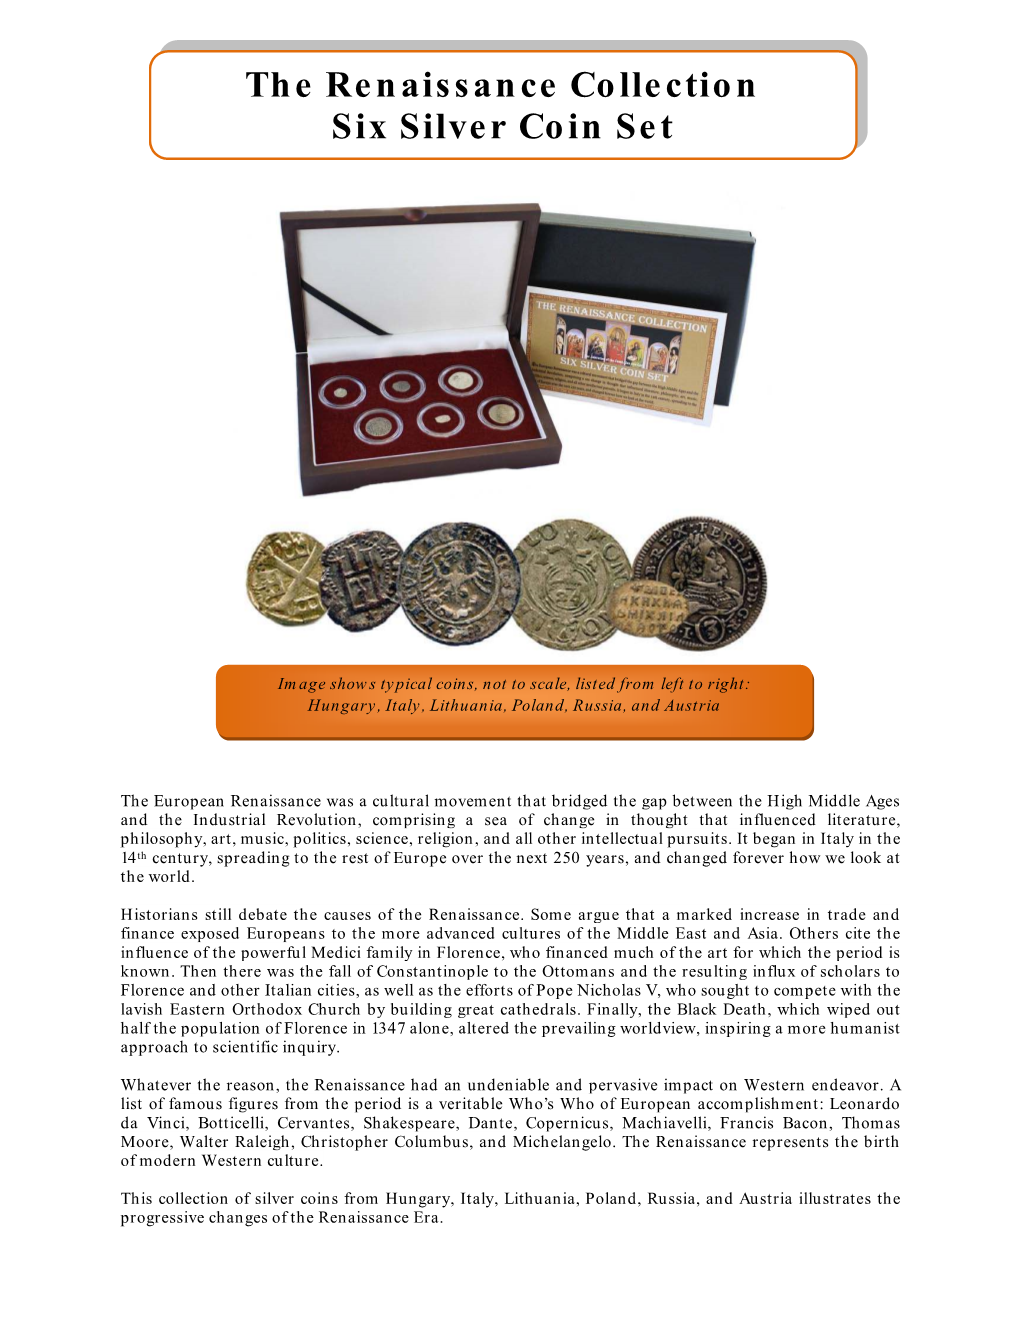 The Renaissance Collection Six Silver Coin Set